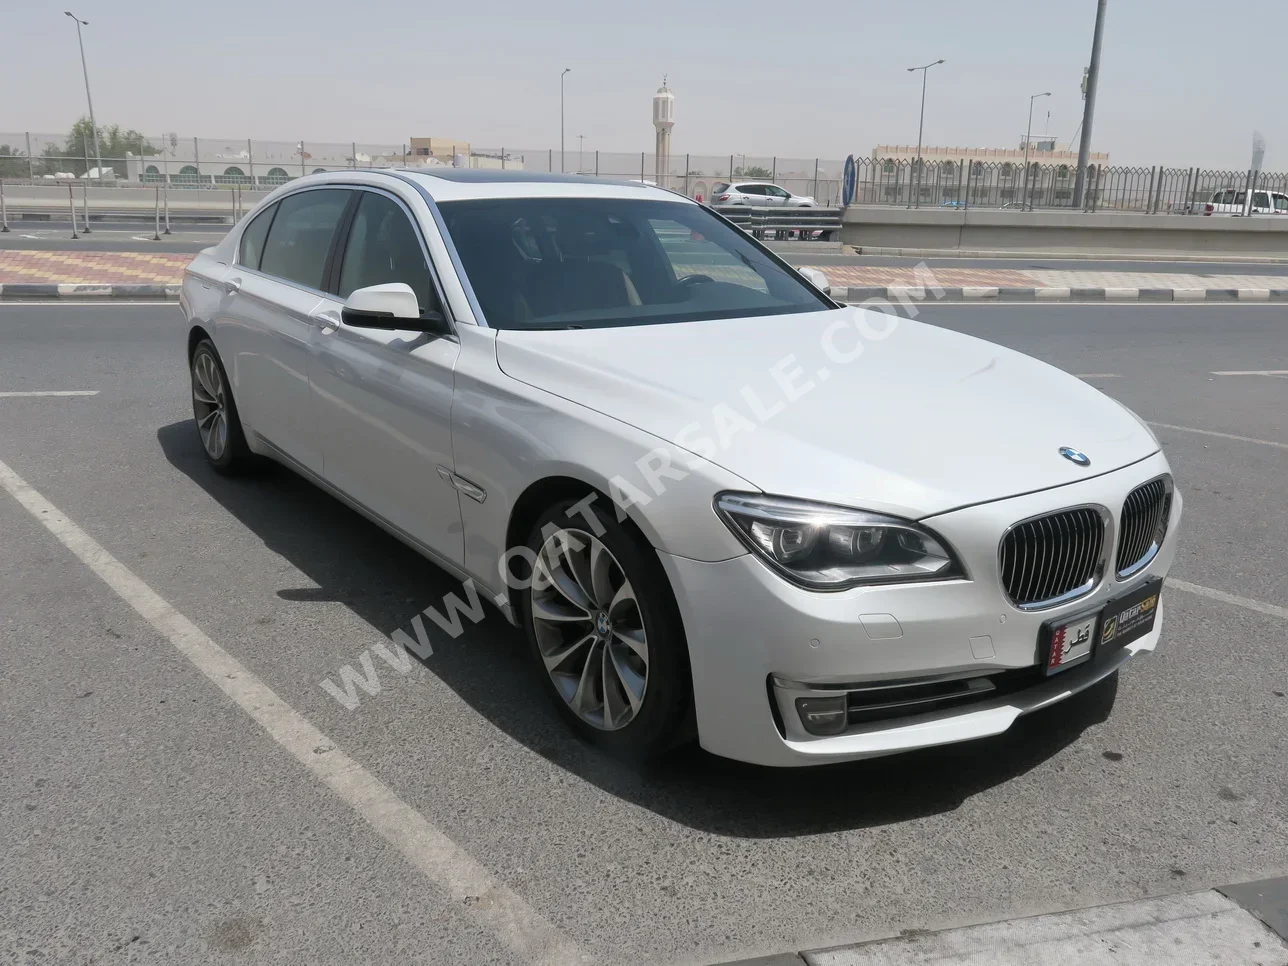 BMW  7-Series  730 Li  2015  Automatic  282,000 Km  6 Cylinder  Rear Wheel Drive (RWD)  Sedan  White